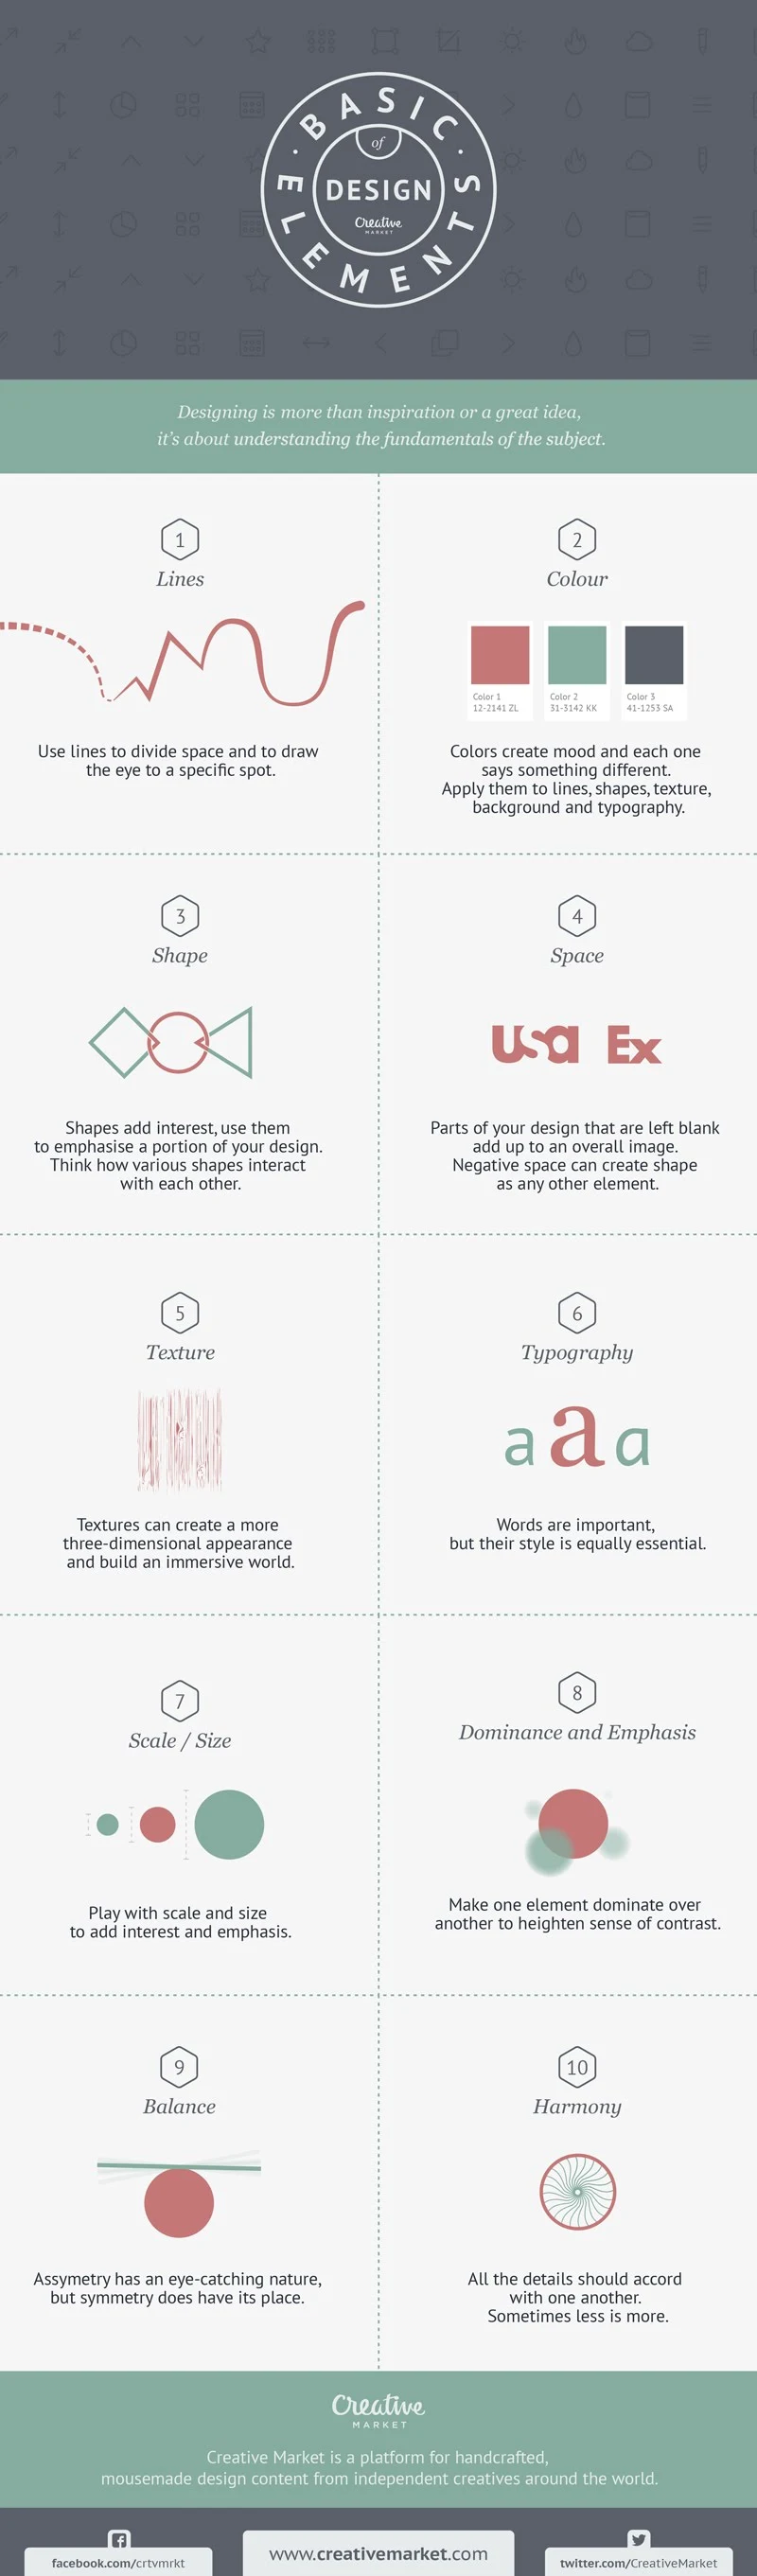 10 Basic Elements of Design - #infographic